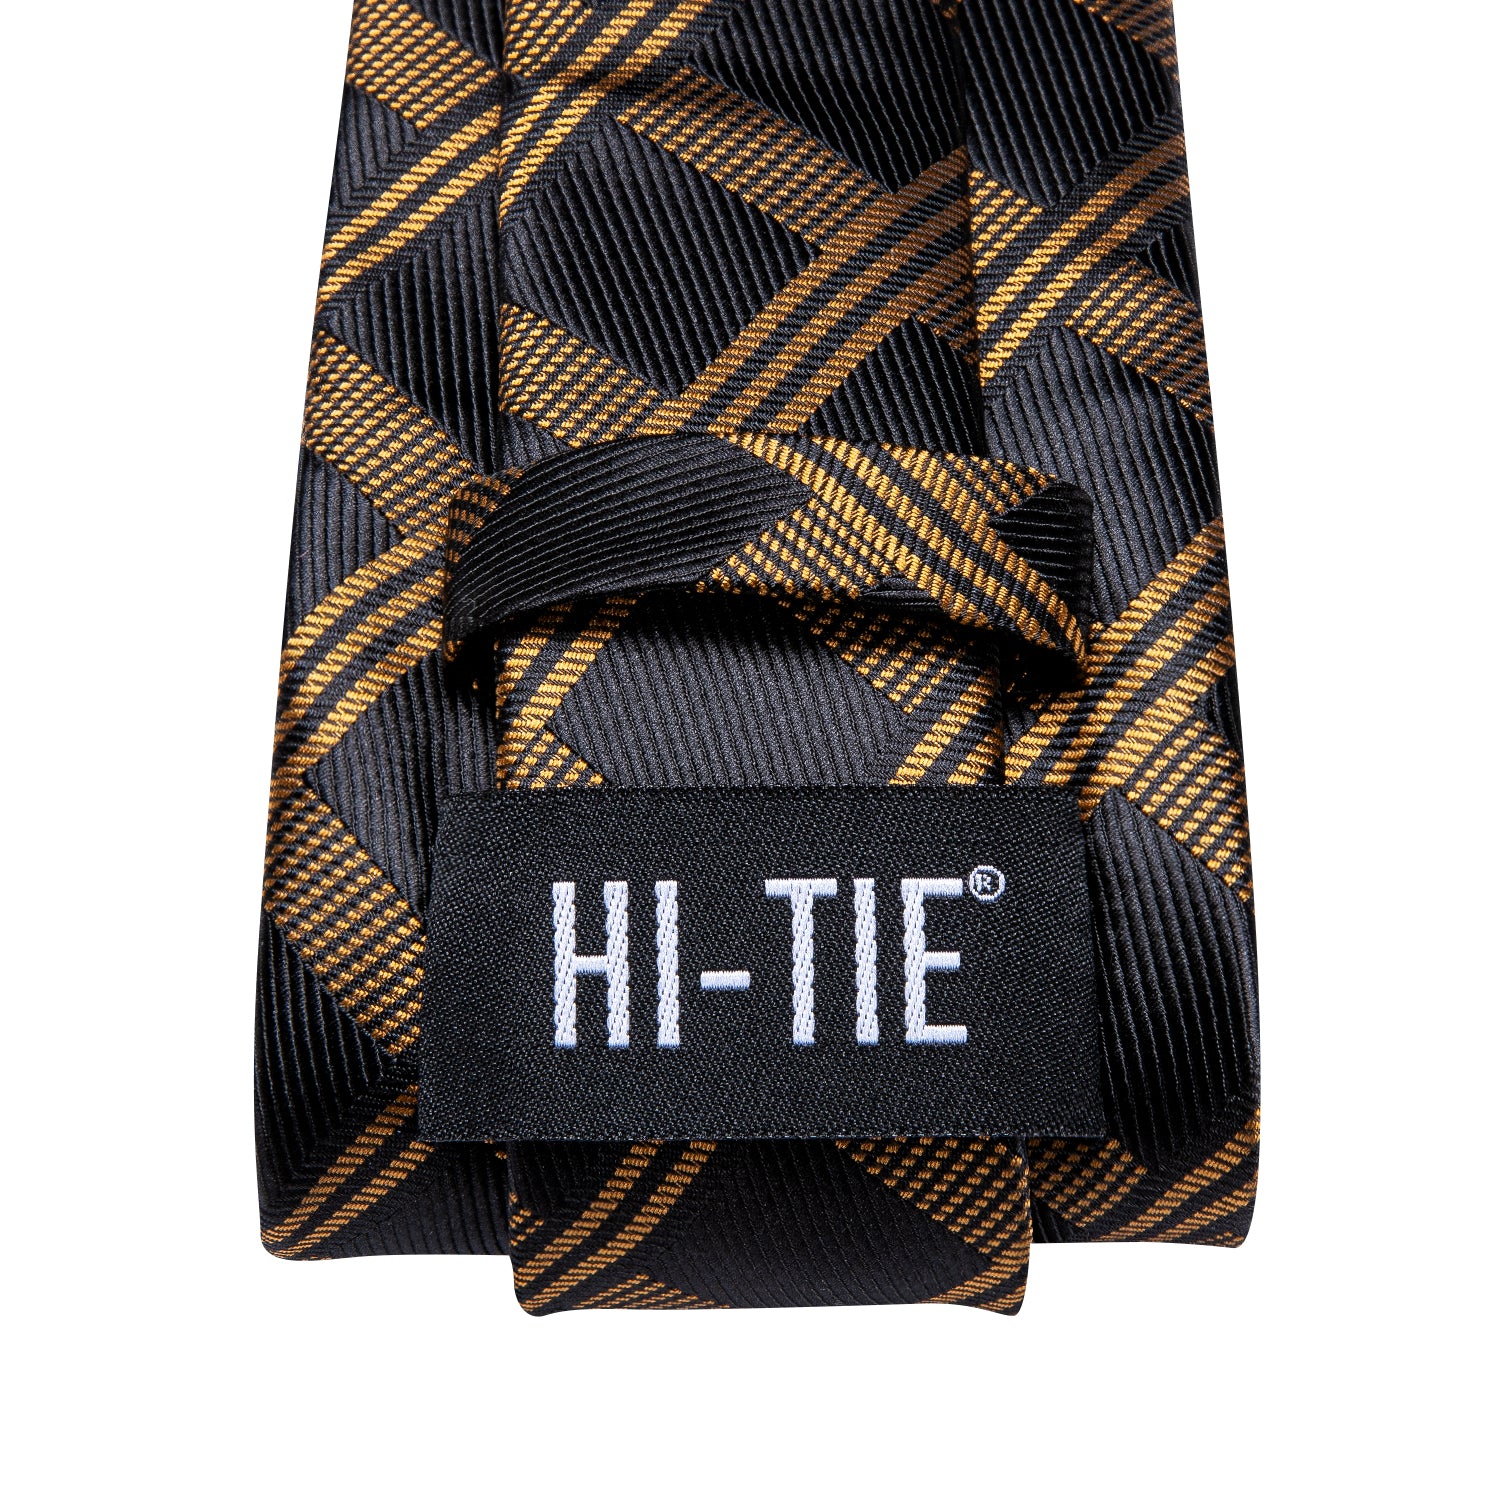 Hi-Tie Gold Black Plaid Men's Tie Pocket Square Cufflinks Set